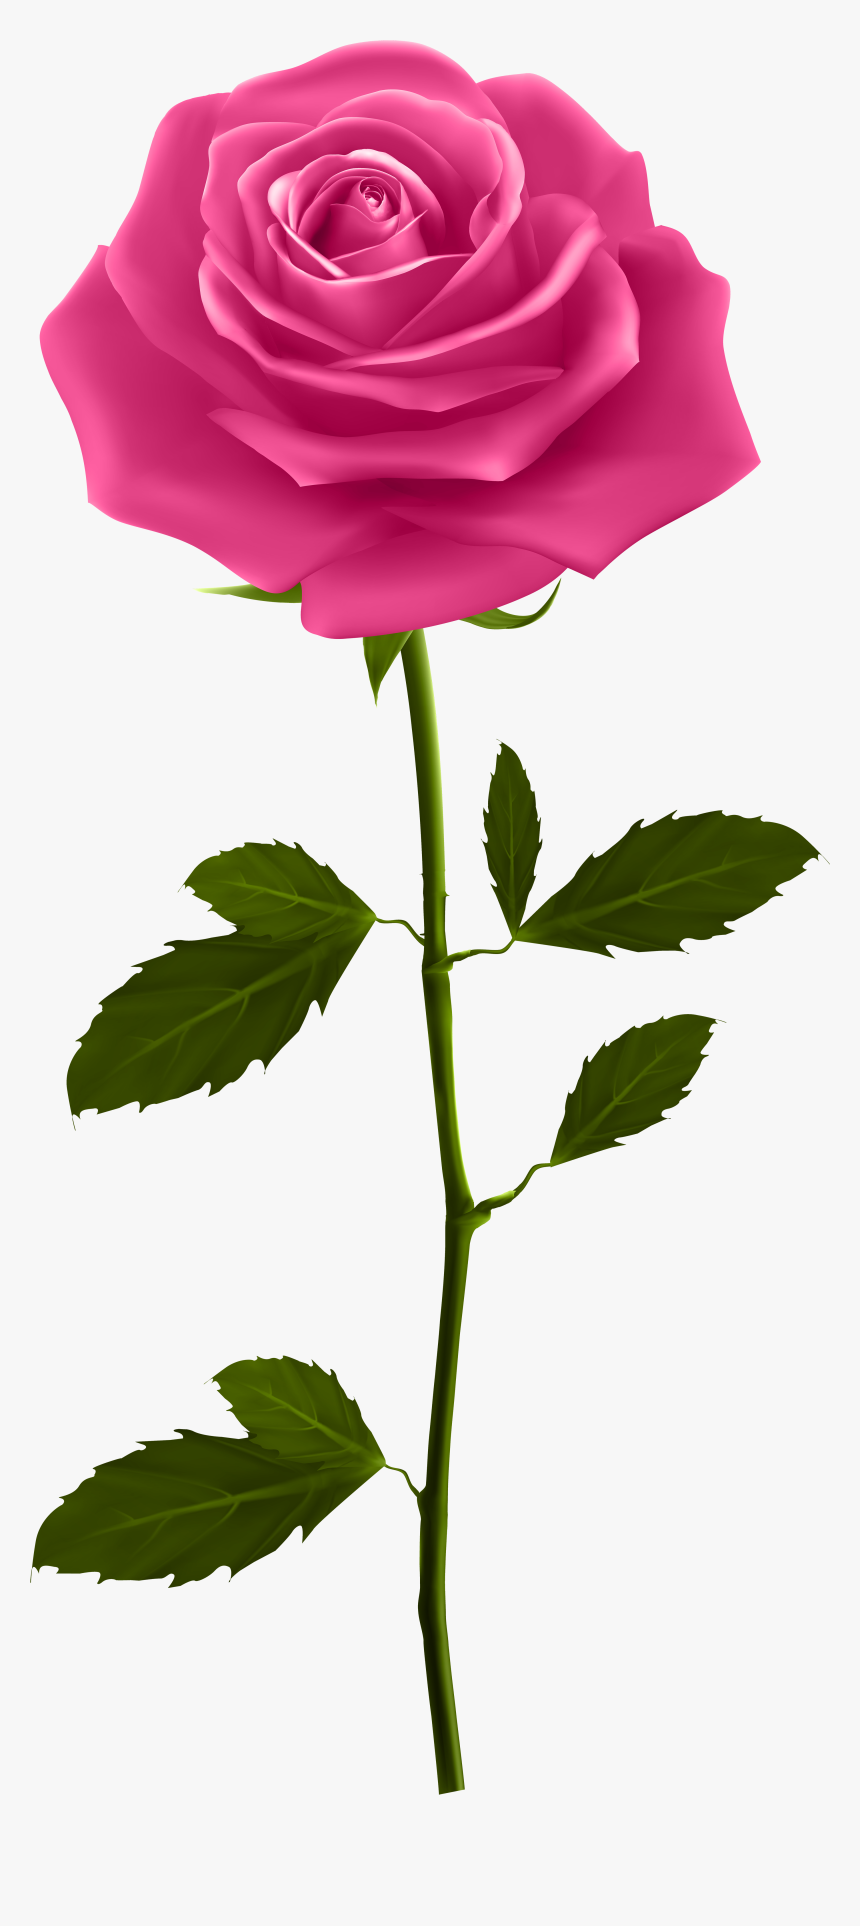 Red Rose Petals Png Download - Pink Rose With Stem, Transparent Png, Free Download